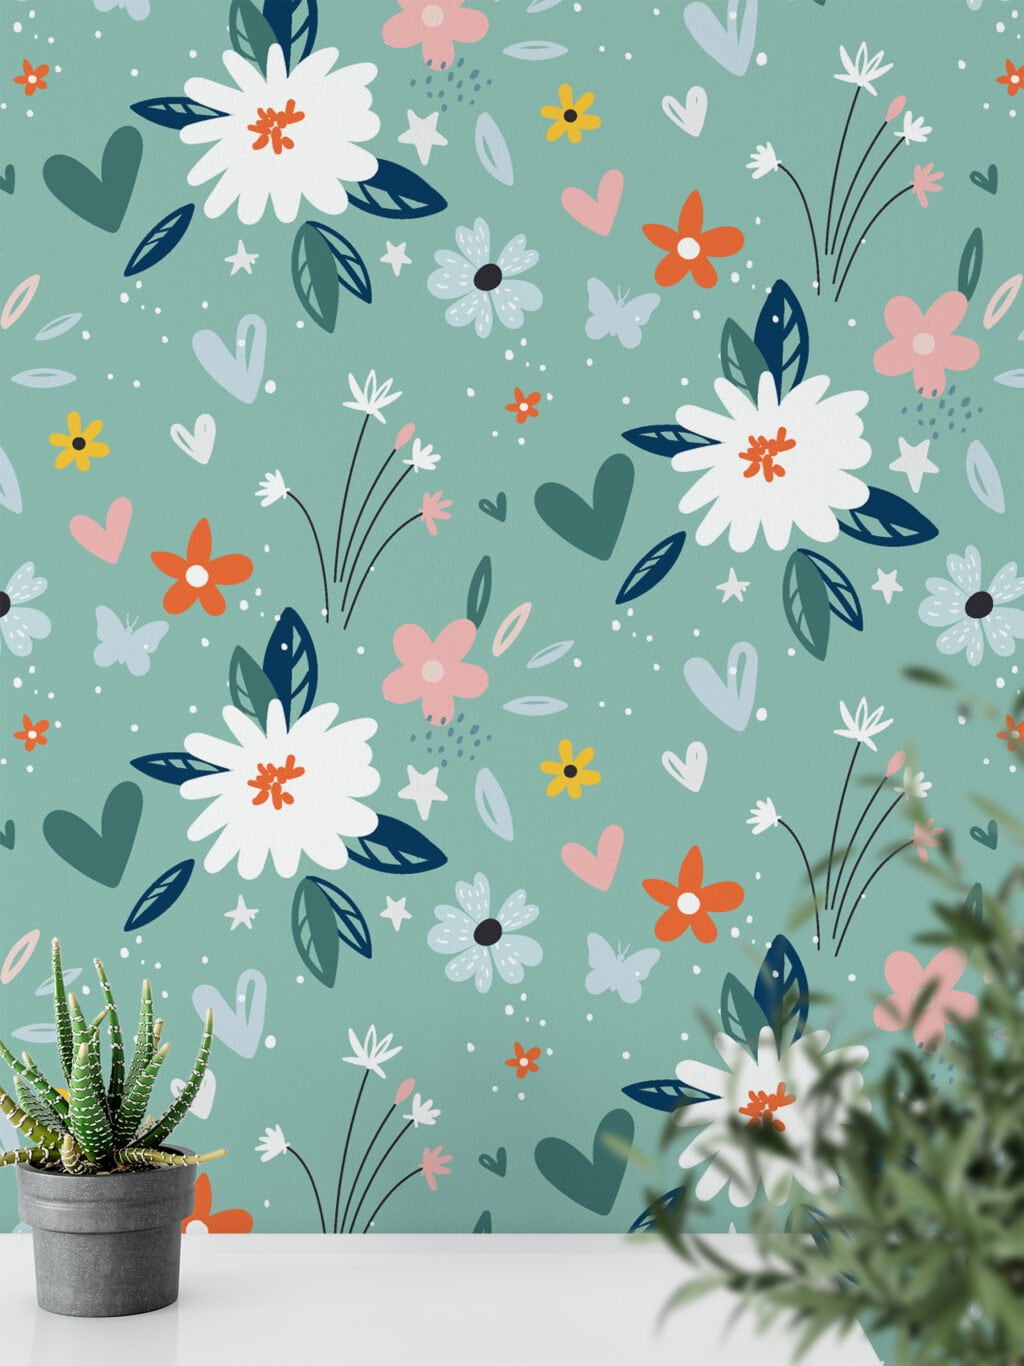 Floral Flat Art Heart Design Pattern Illustration Wallpaper, Delightful Spring Peel & Stick Wall Mural